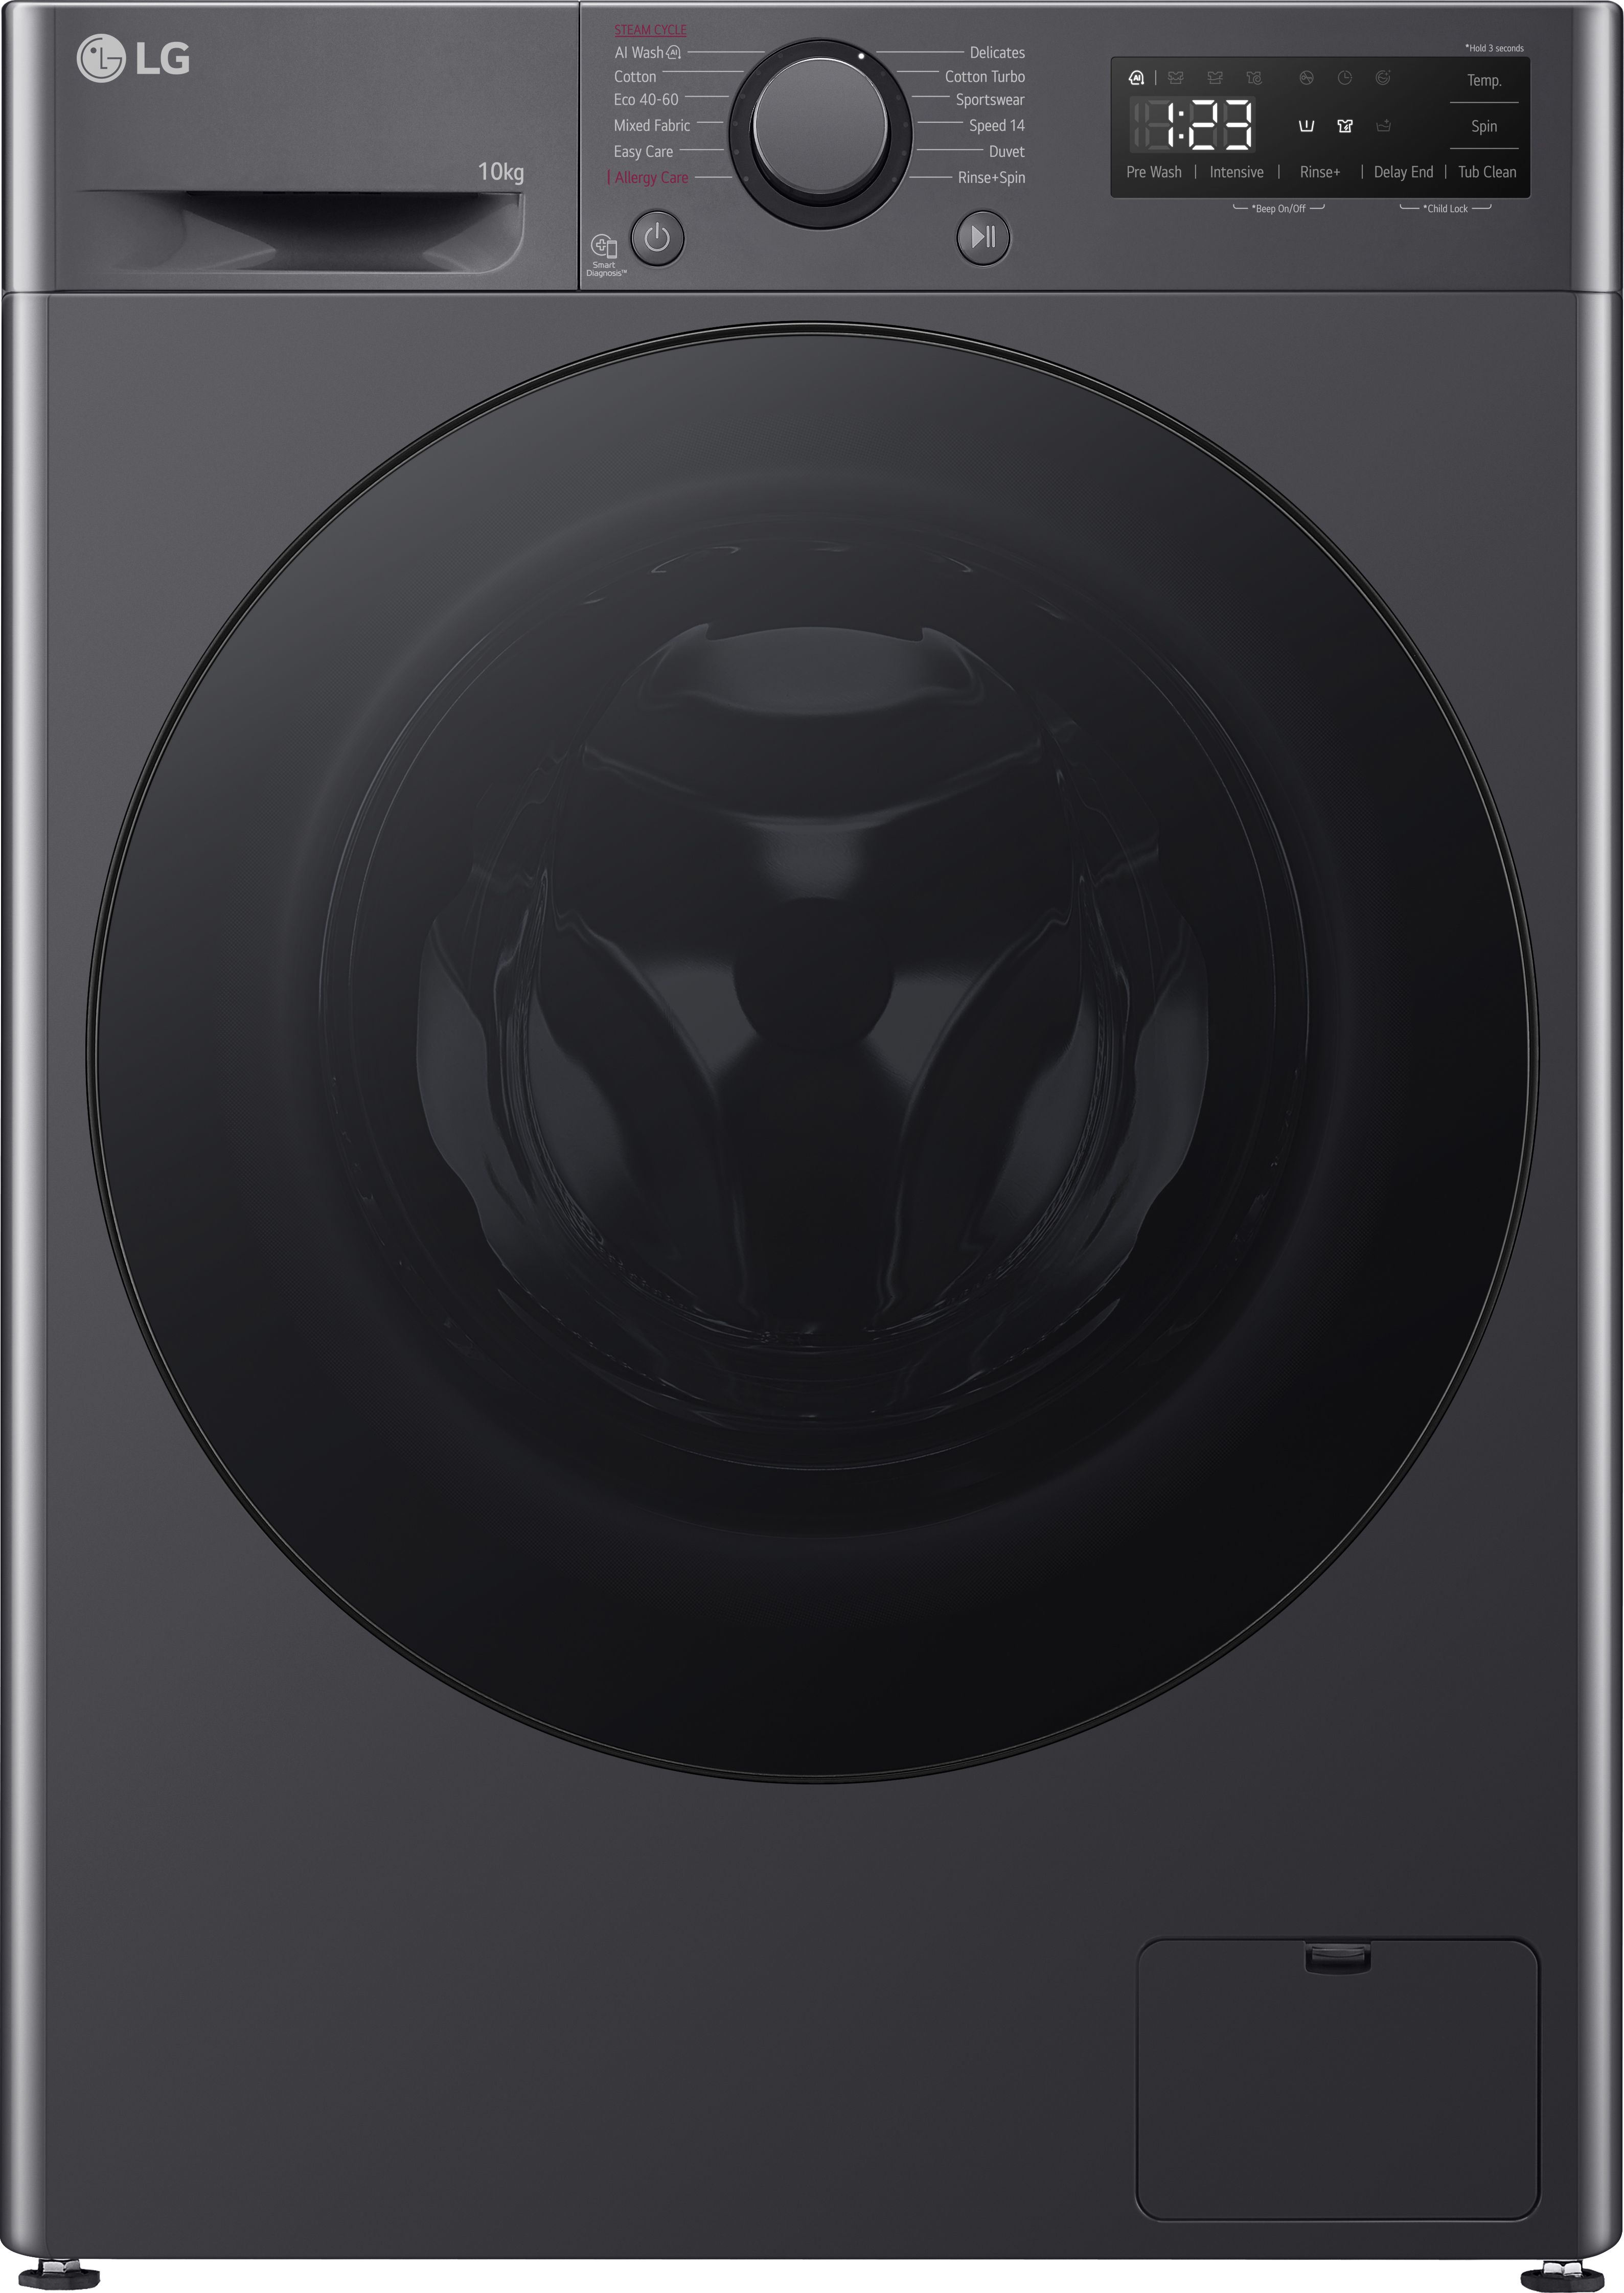 LG TurboWash F4A510GBLN1 10kg Washing Machine with 1400 rpm - Slate Grey - A Rated, Slate Grey